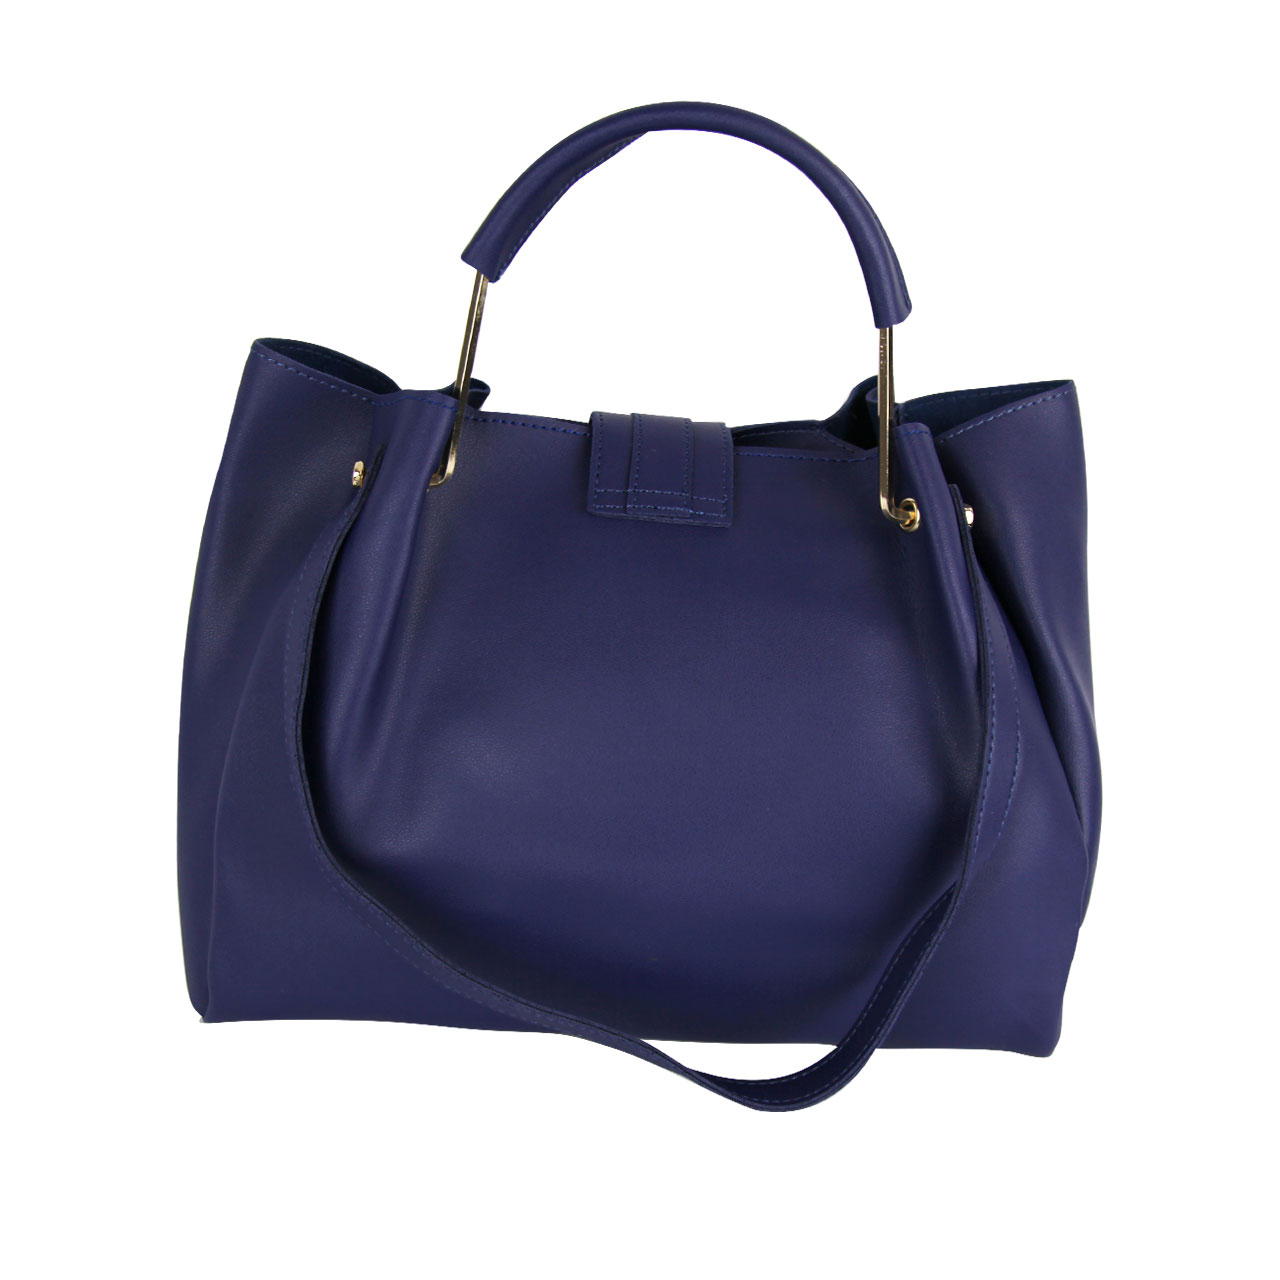 PU Leather 3 Piece Womens Handbag Set Teal Blue/Green Top Handle Tote Shoulder Sling Bag With Purse